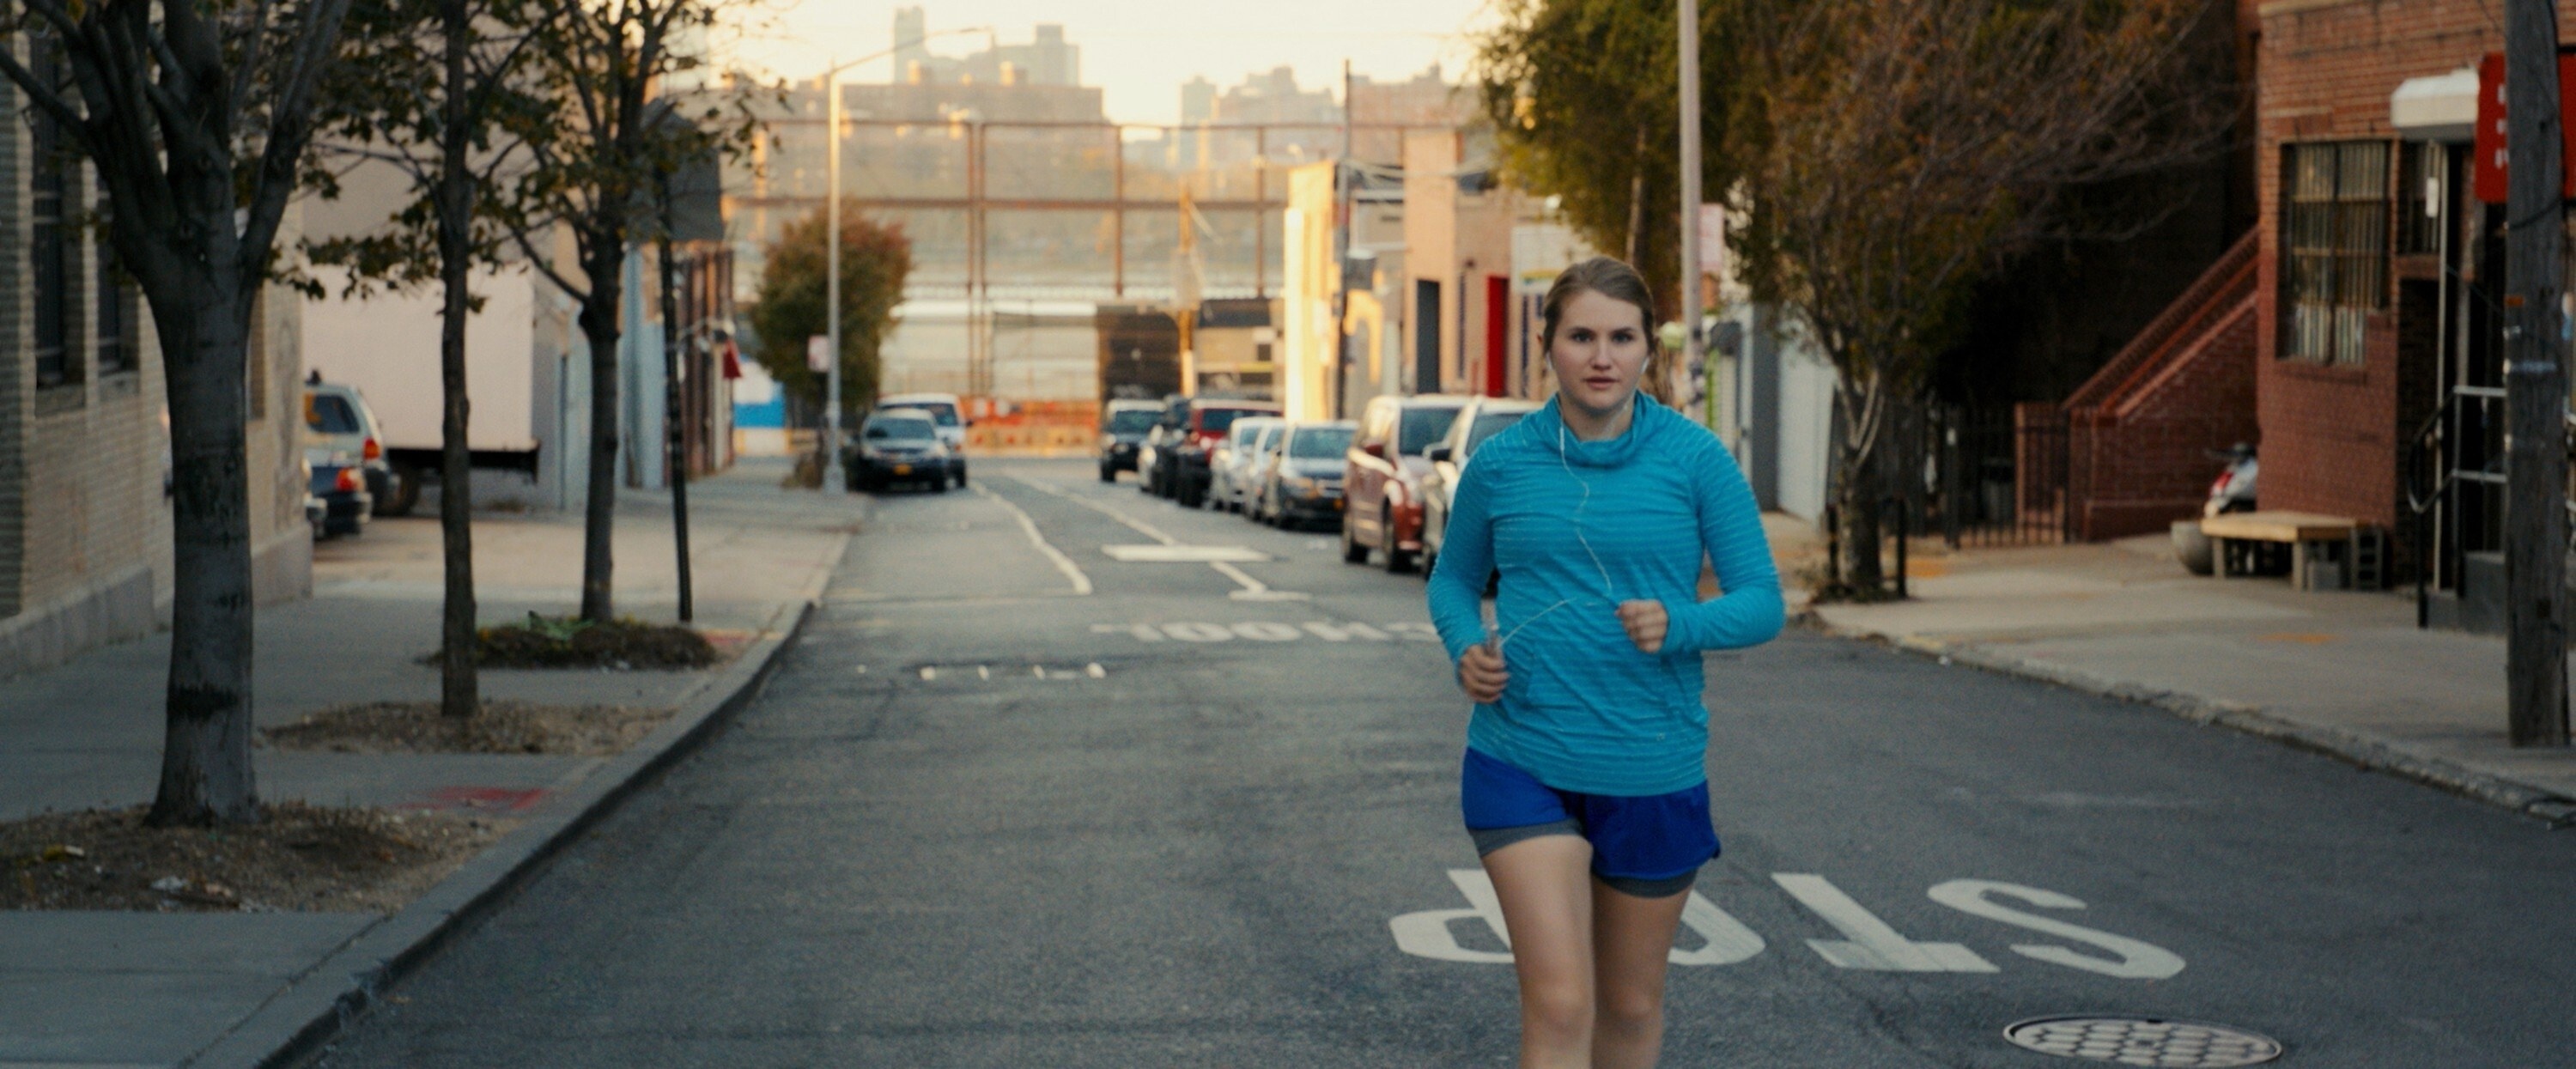 Brittany Runs a Marathon, Best Amazon Prime, Movies July 2021, Watch, 3000x1250 Dual Screen Desktop